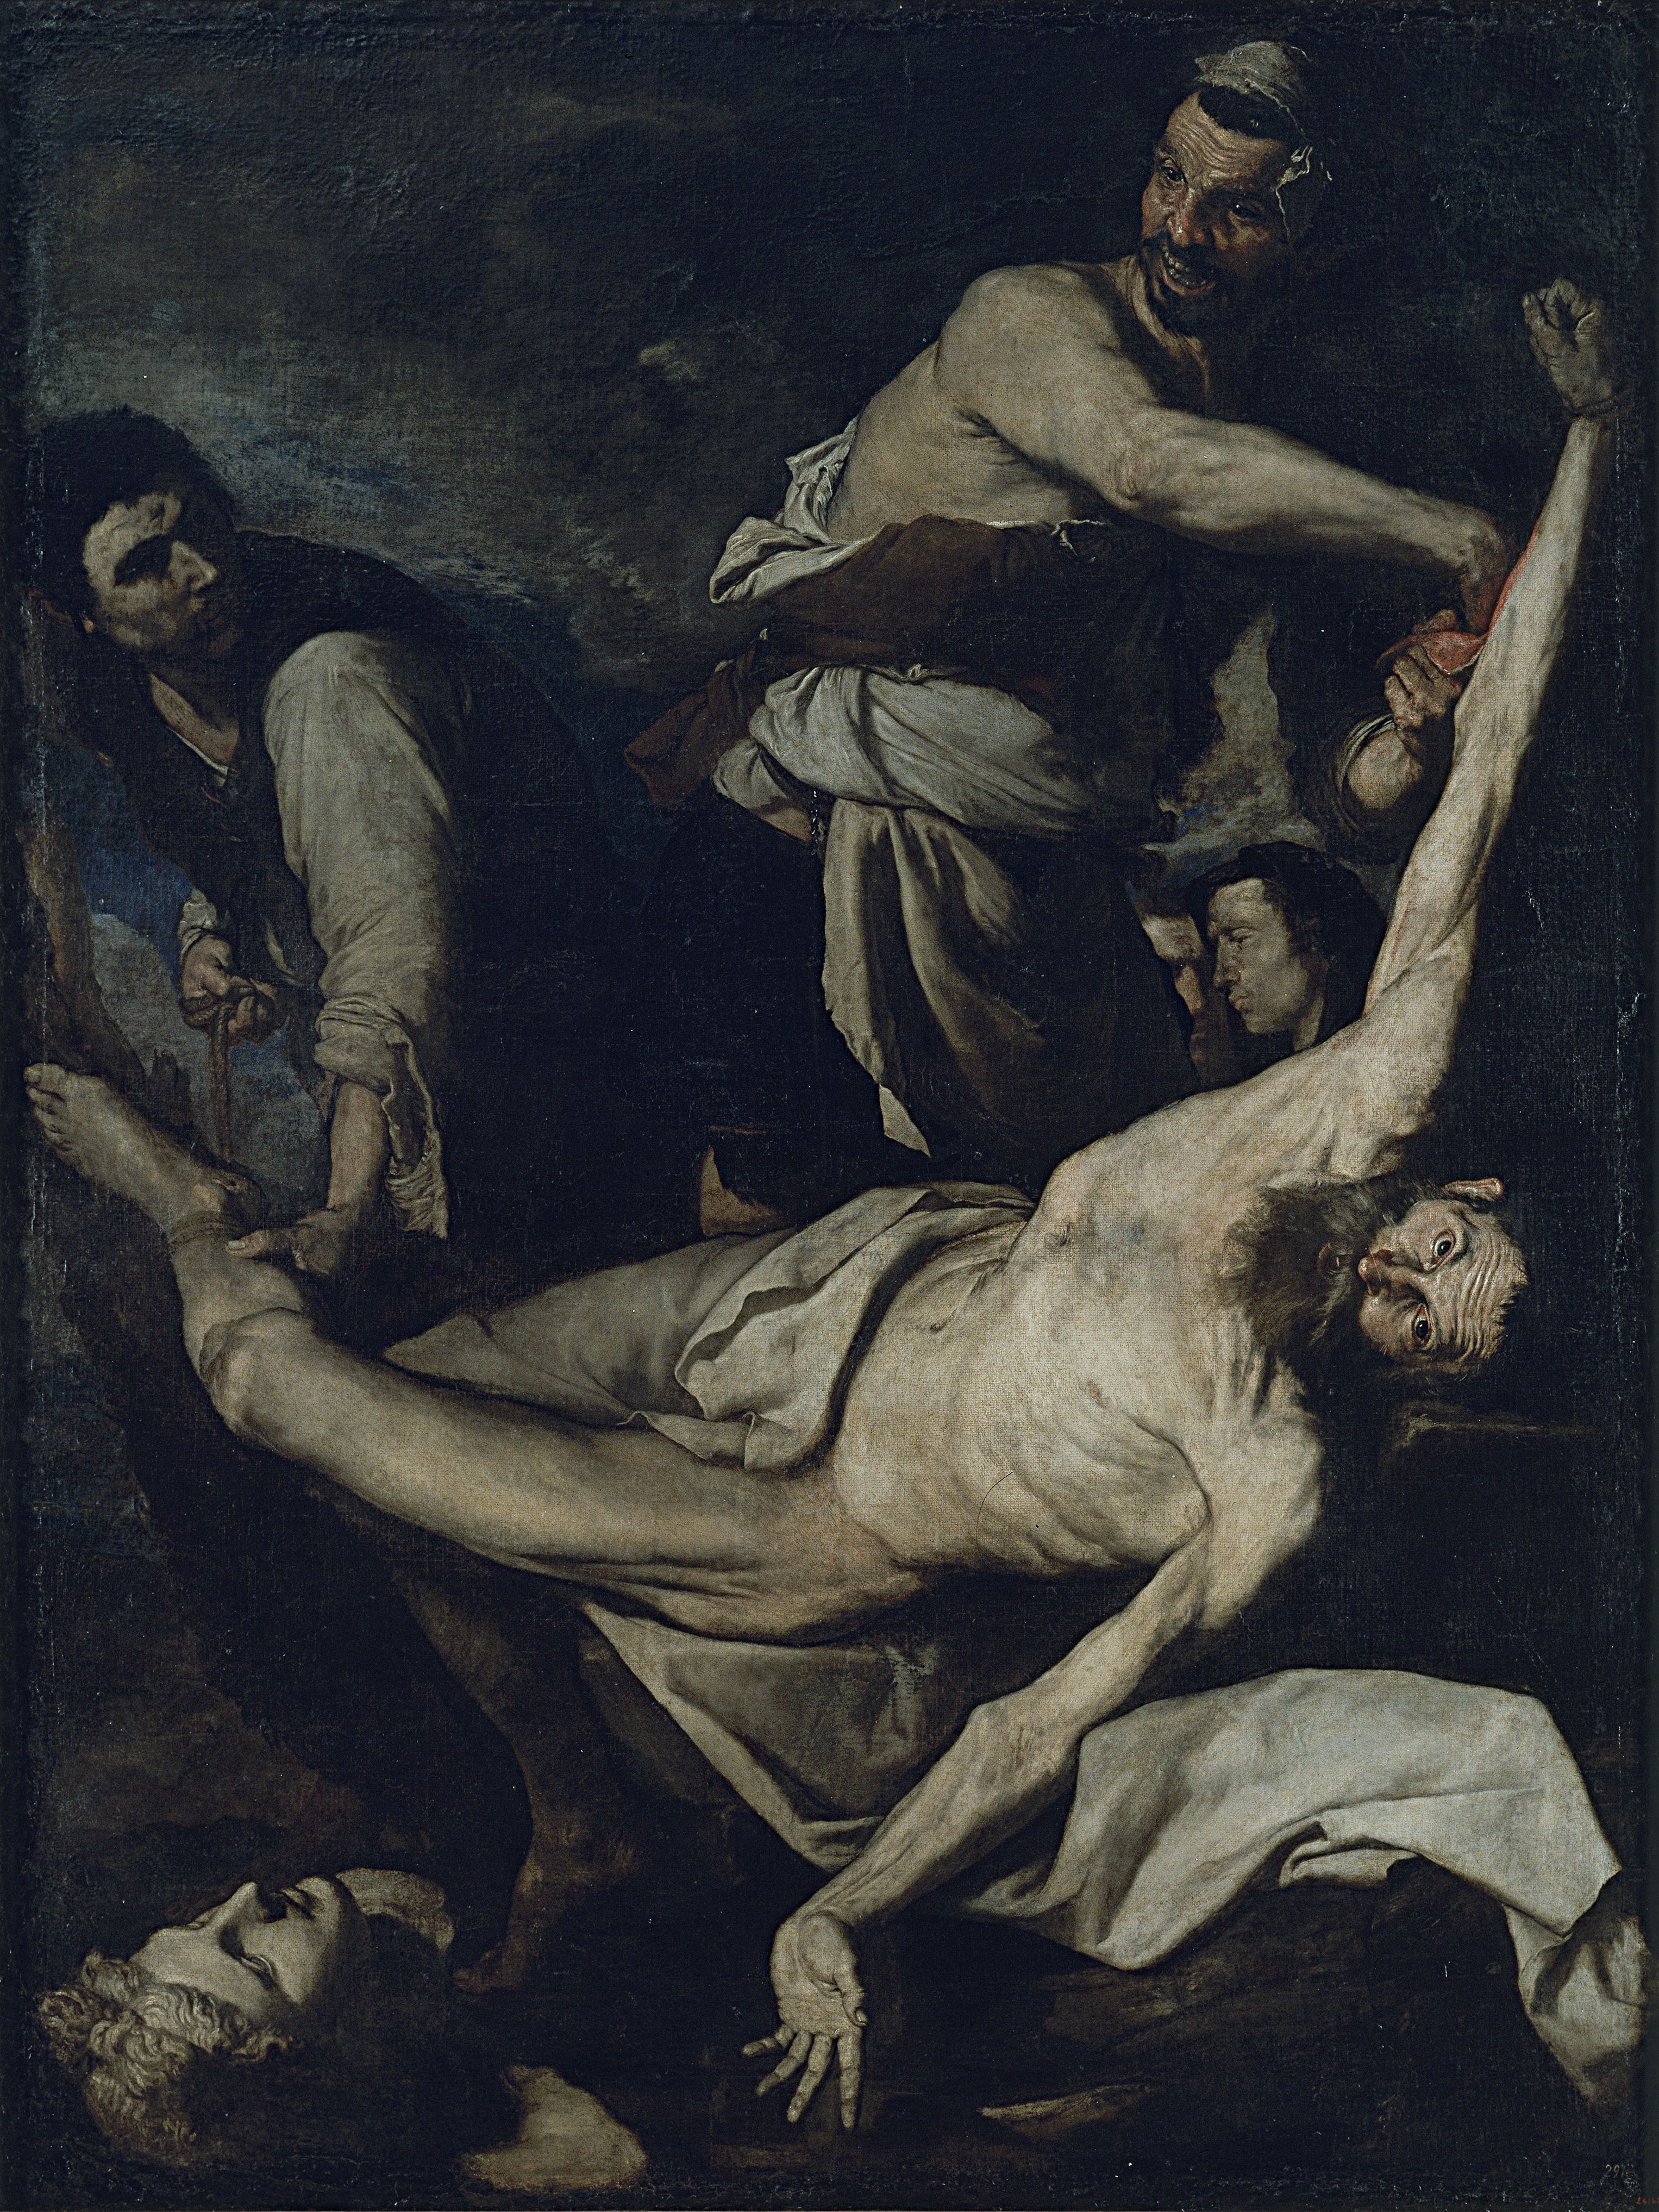 Jusepe de Ribera, Martyrdom of Saint Bartholomew, 1644, Oil on canvas, 202 x 153 cm, Museu Nacional d’Art de Catalunya, Barcelona. Photo: Mnac, Calveras/Mérida/Sagristà. ©Museu Nacional d’Art de Catalunya, Barcelona, 2018.